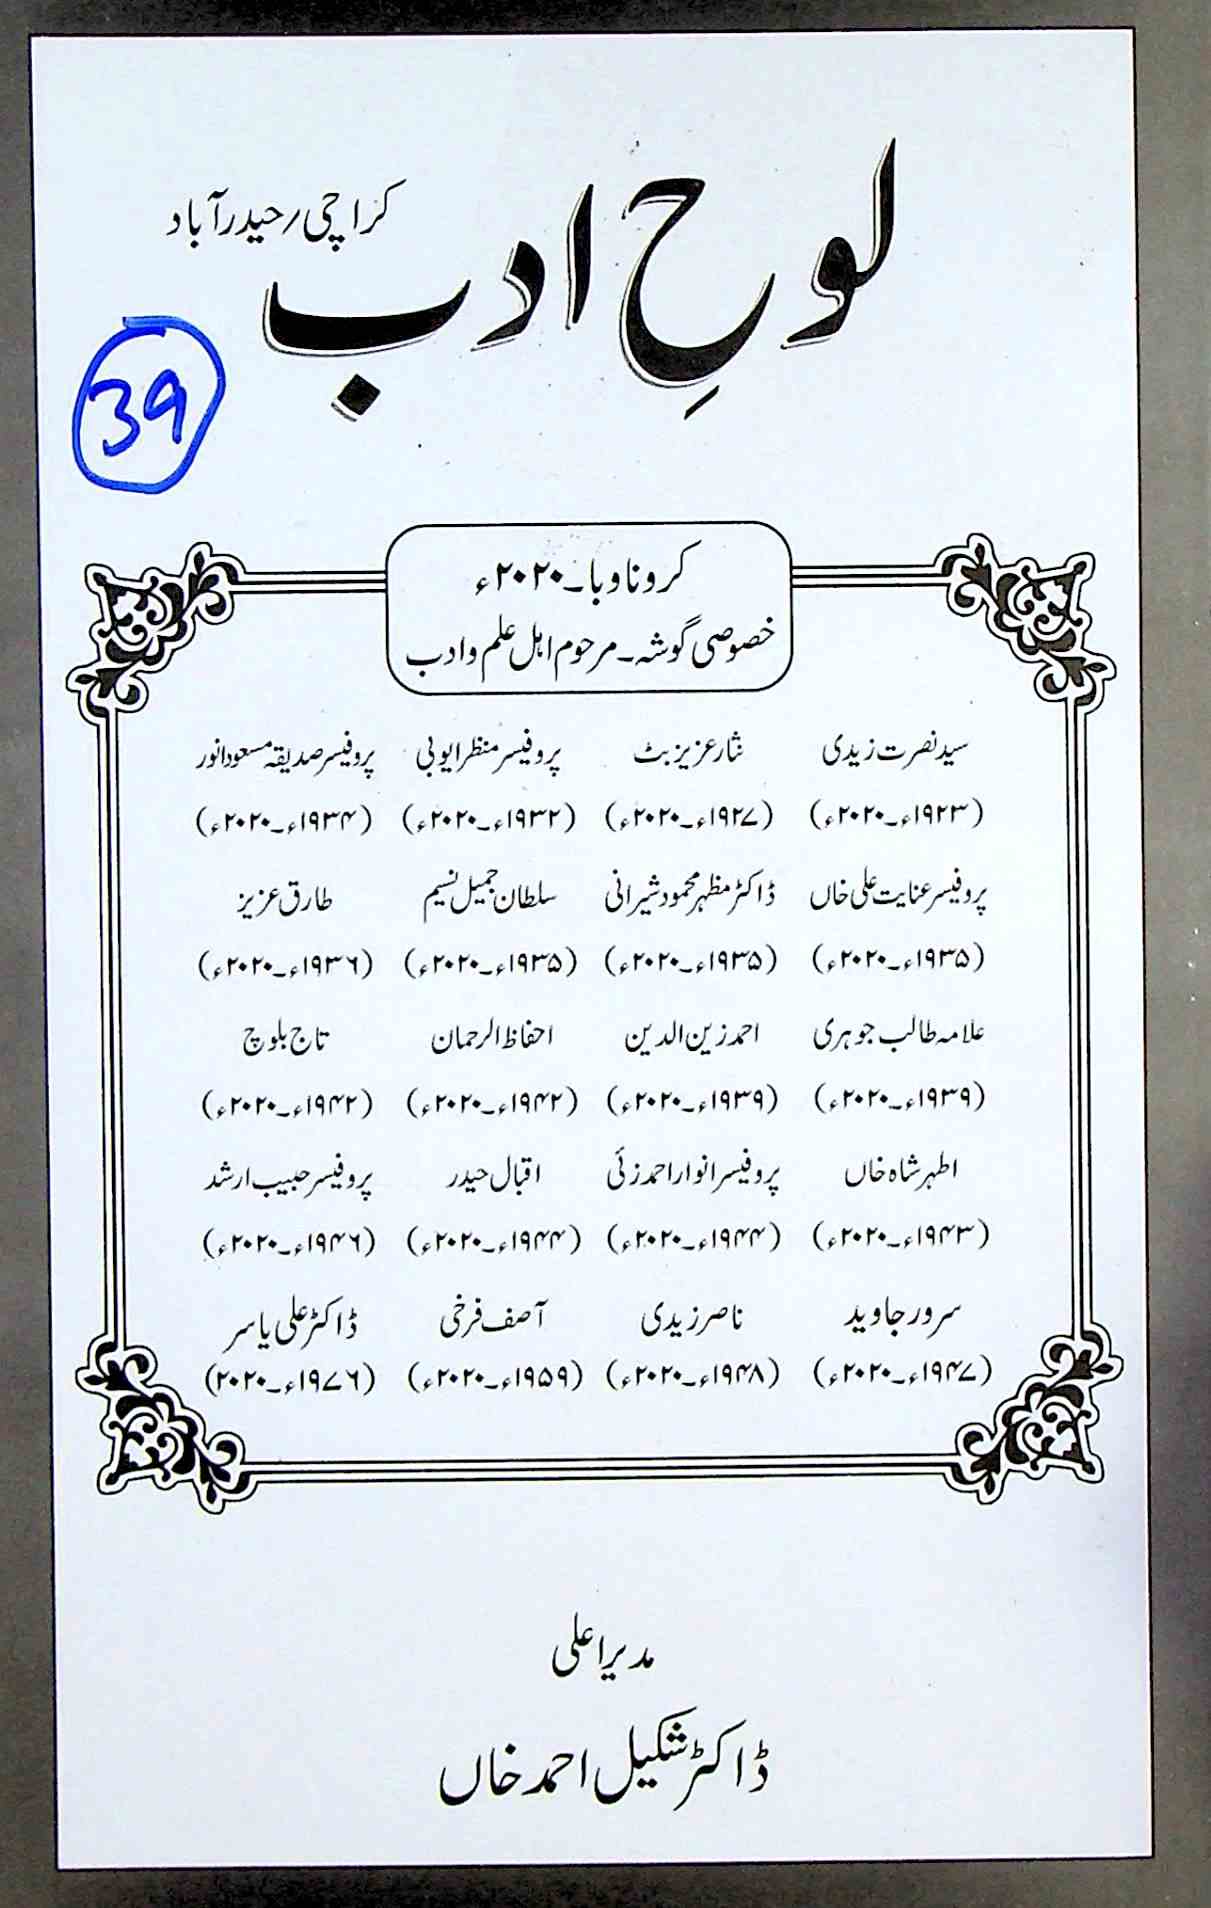 Lauh e Adab Jild-23 Shumara-jan-june-Shumara Number-039